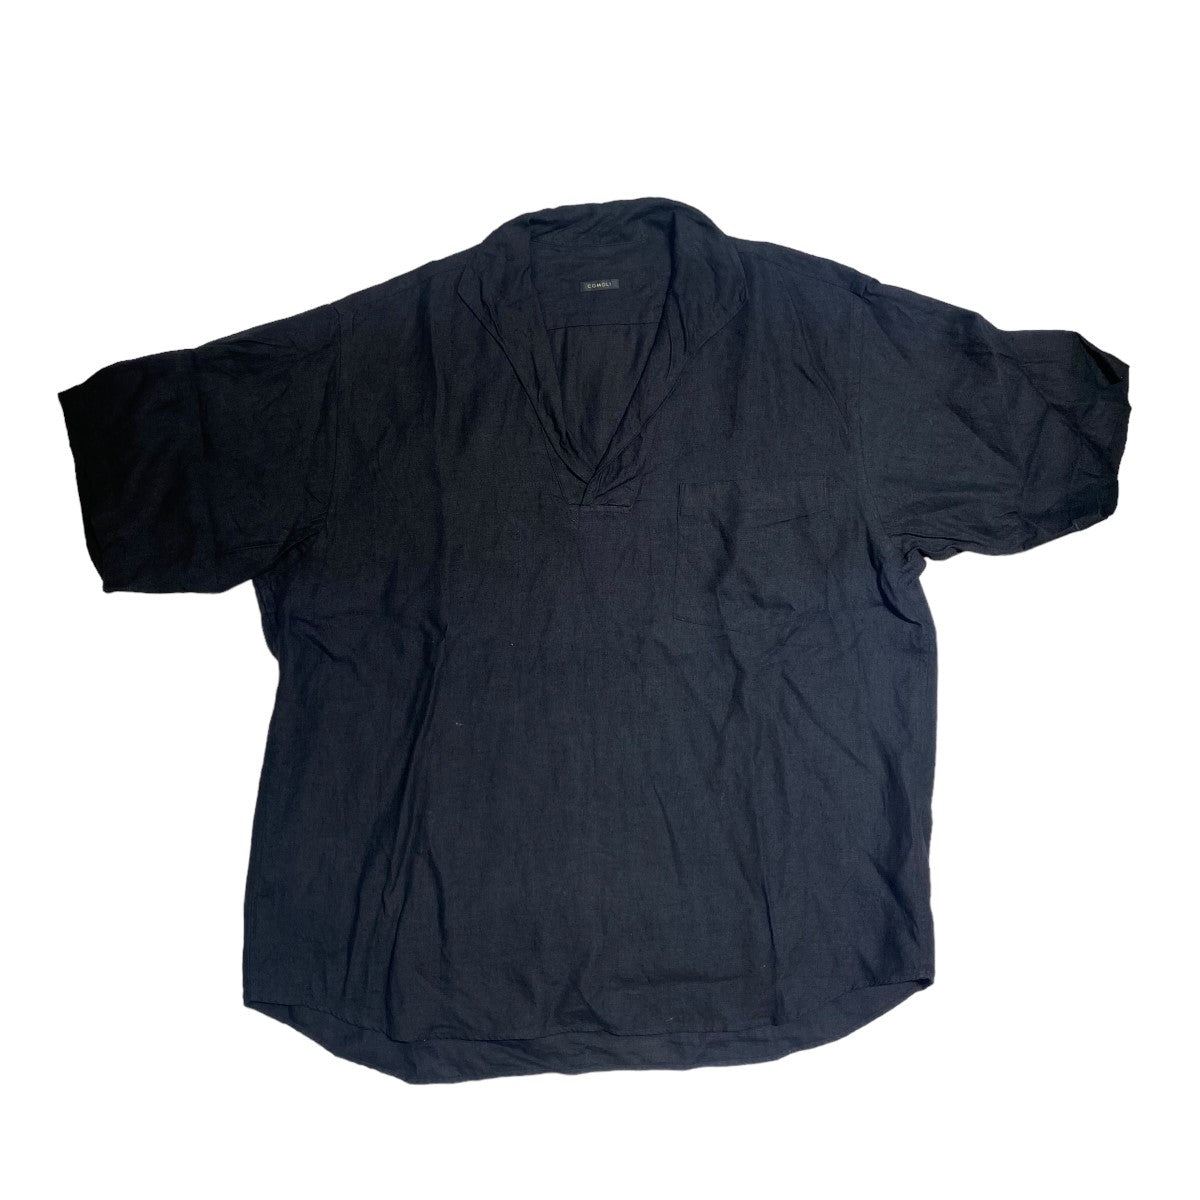 Colocomoli コモリ カナパスキッパーシャツ ブラック 黒 サイズ2